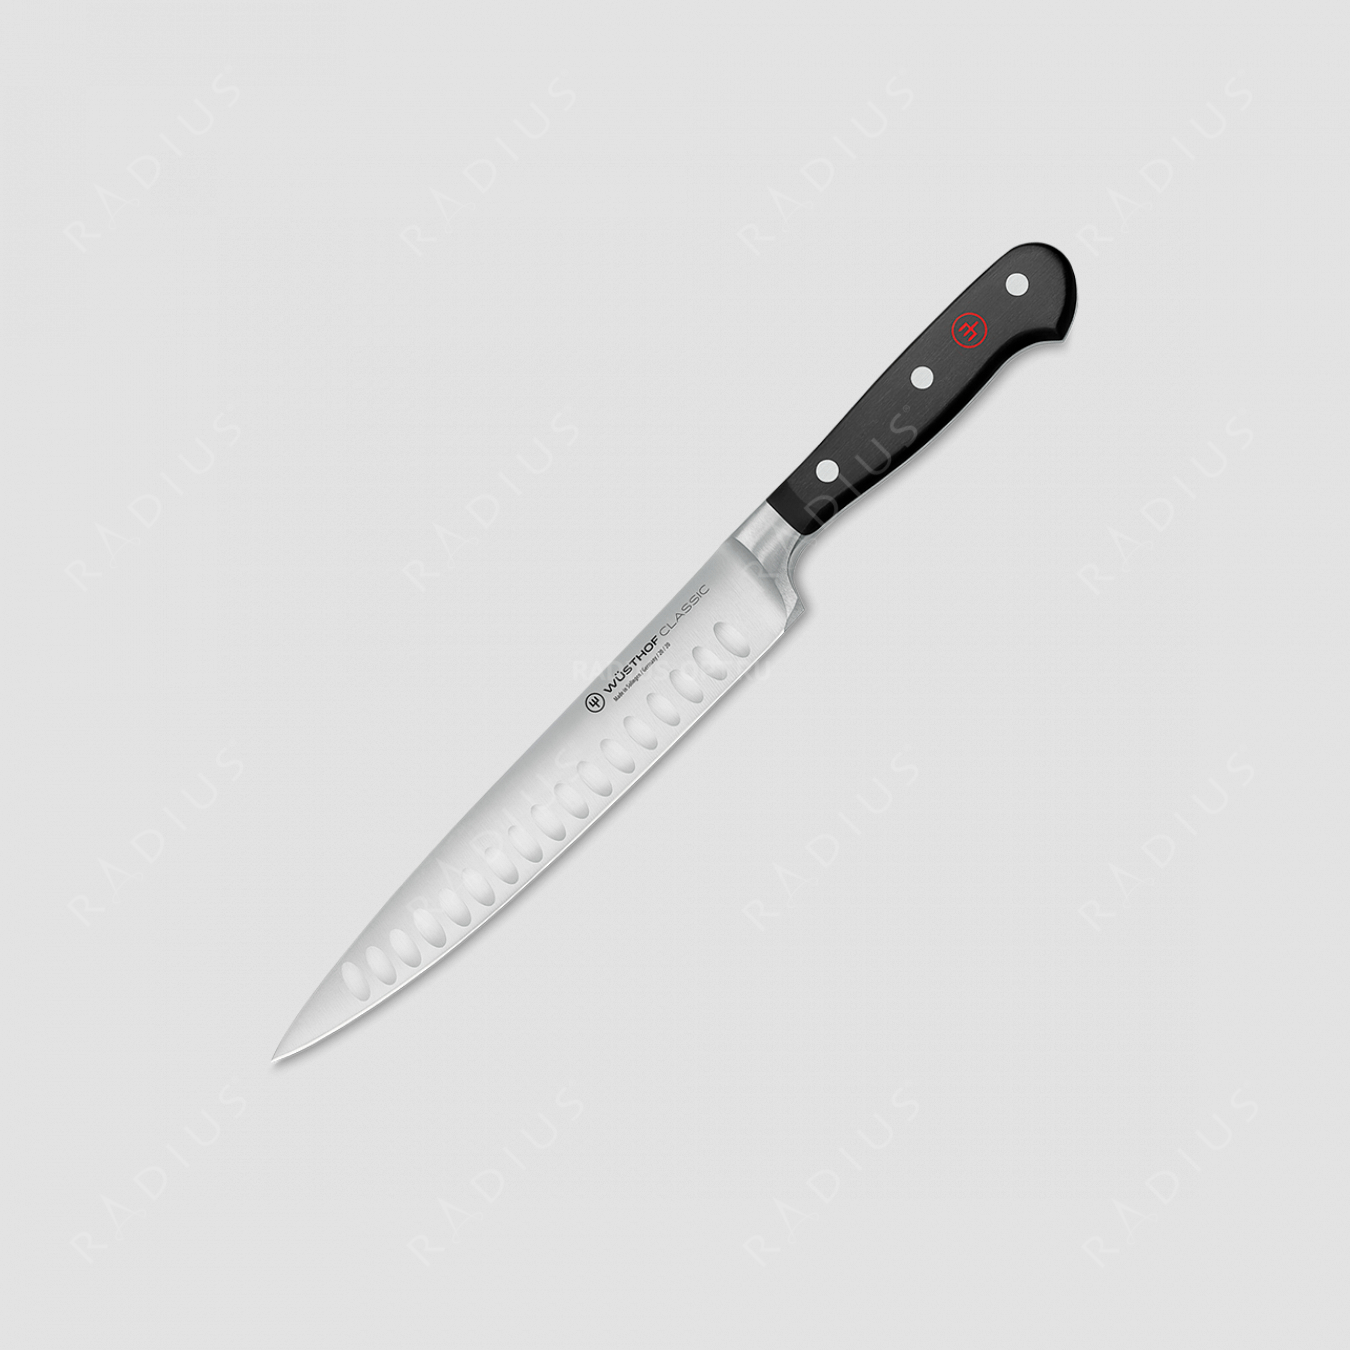 Нож кухонный для резки мяса с углублениями на кромке 20 см, серия Classic, WUESTHOF, Золинген, Германия